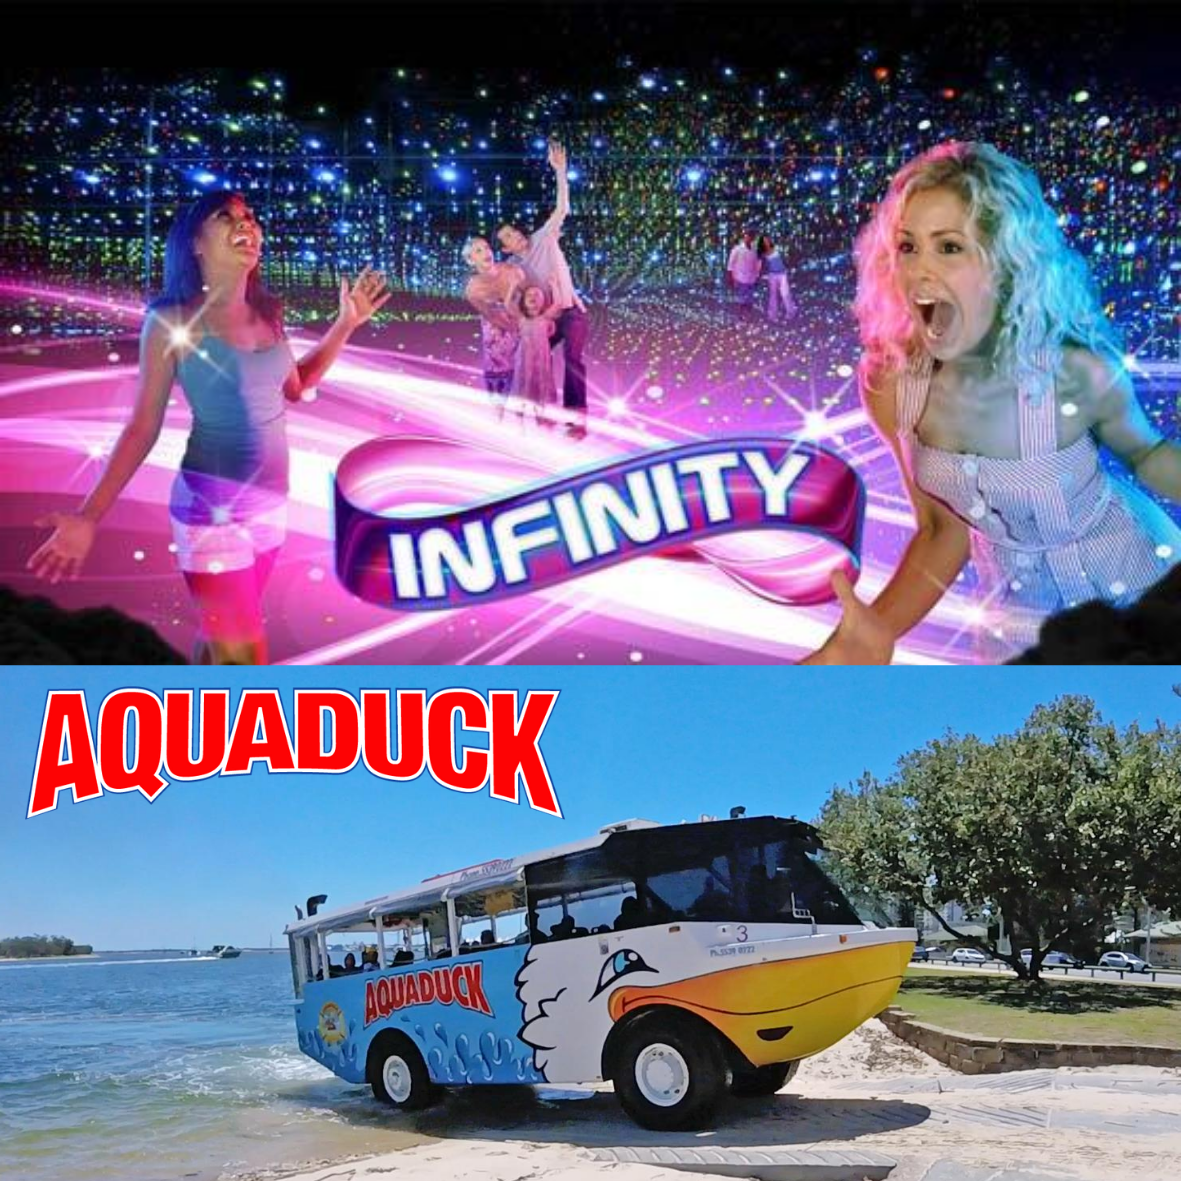 Aquaduck + Infinity Attraction Combo